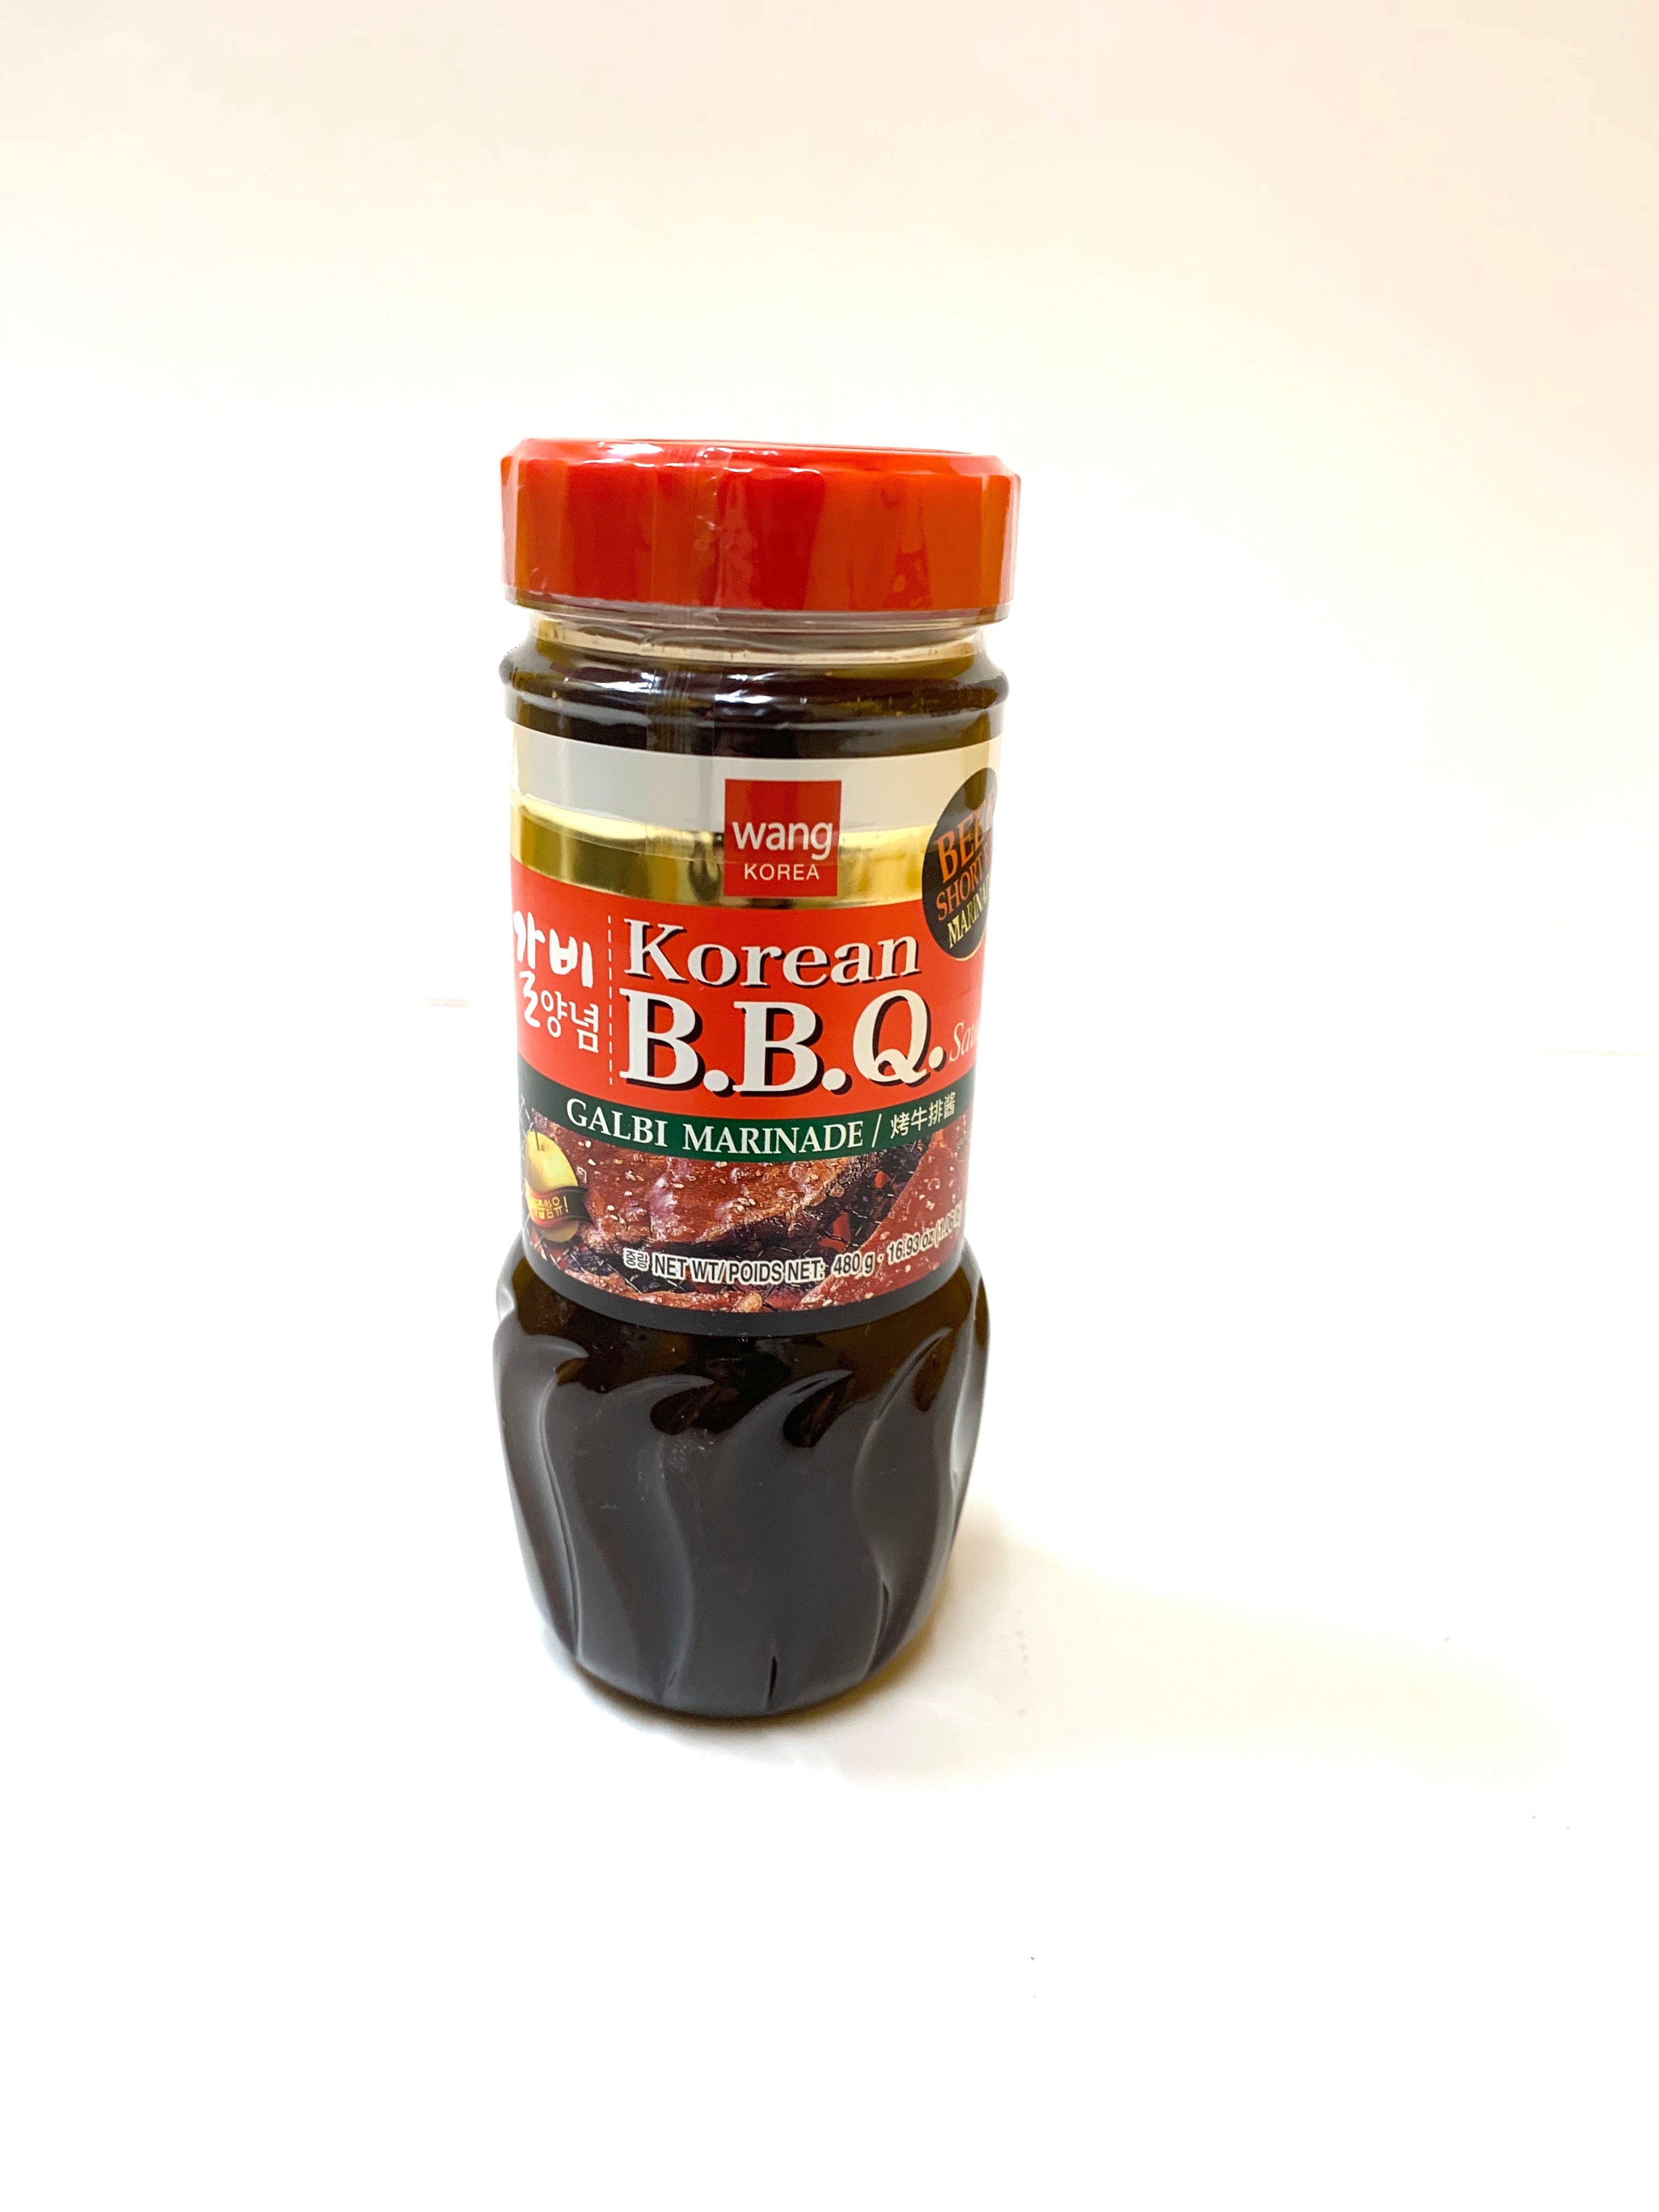 Wang Korean BBQ Sauce Galbi (beef short rib) Marinade - 480g/16.93oz